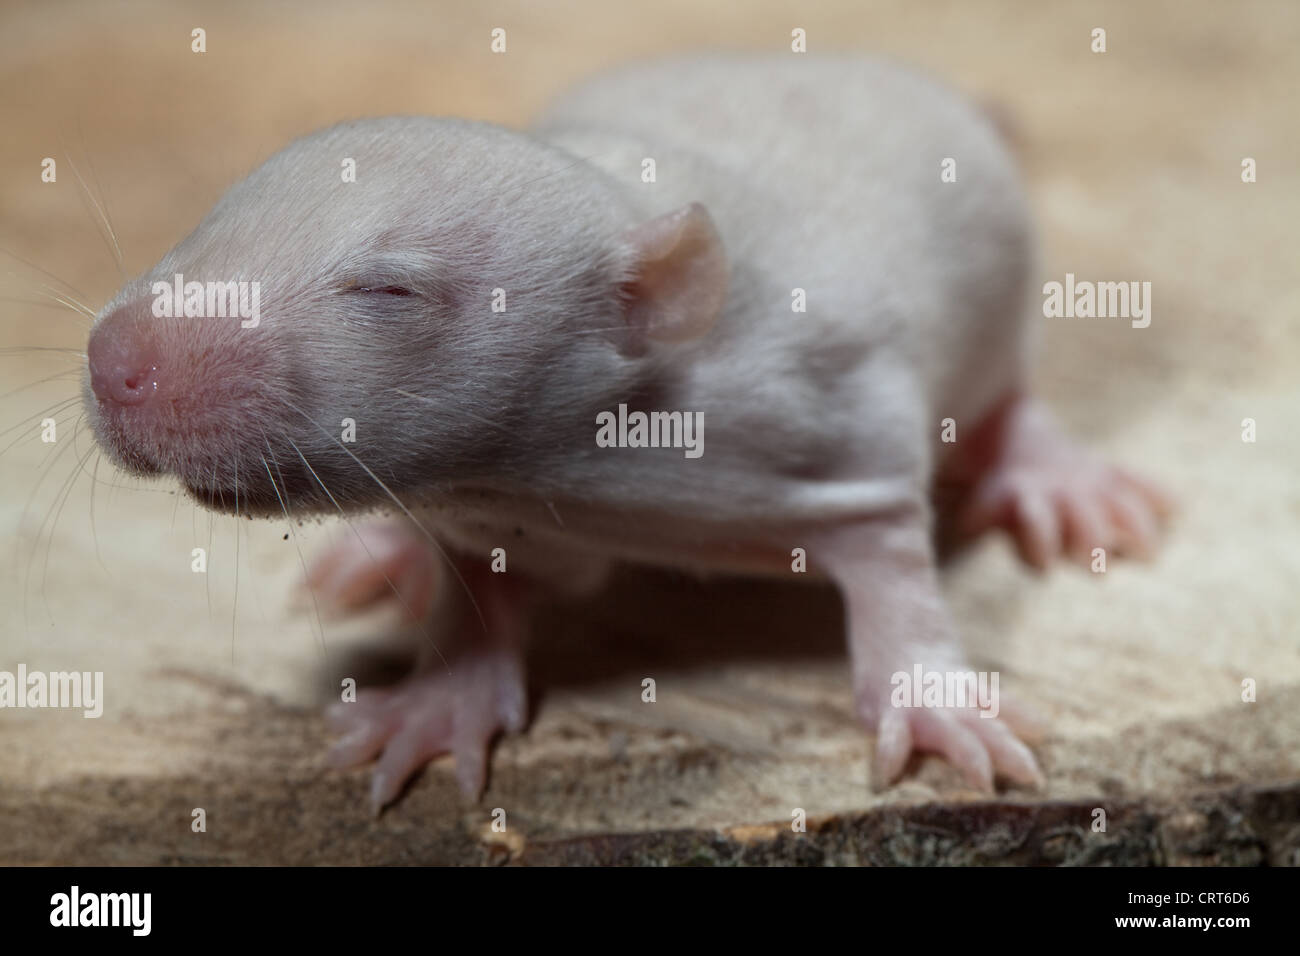 Domesticated White Rat (Rattus norvegicus). 12 days old baby, 'pup' rat. Albino, showing pink eyes beginning to open. Stock Photo